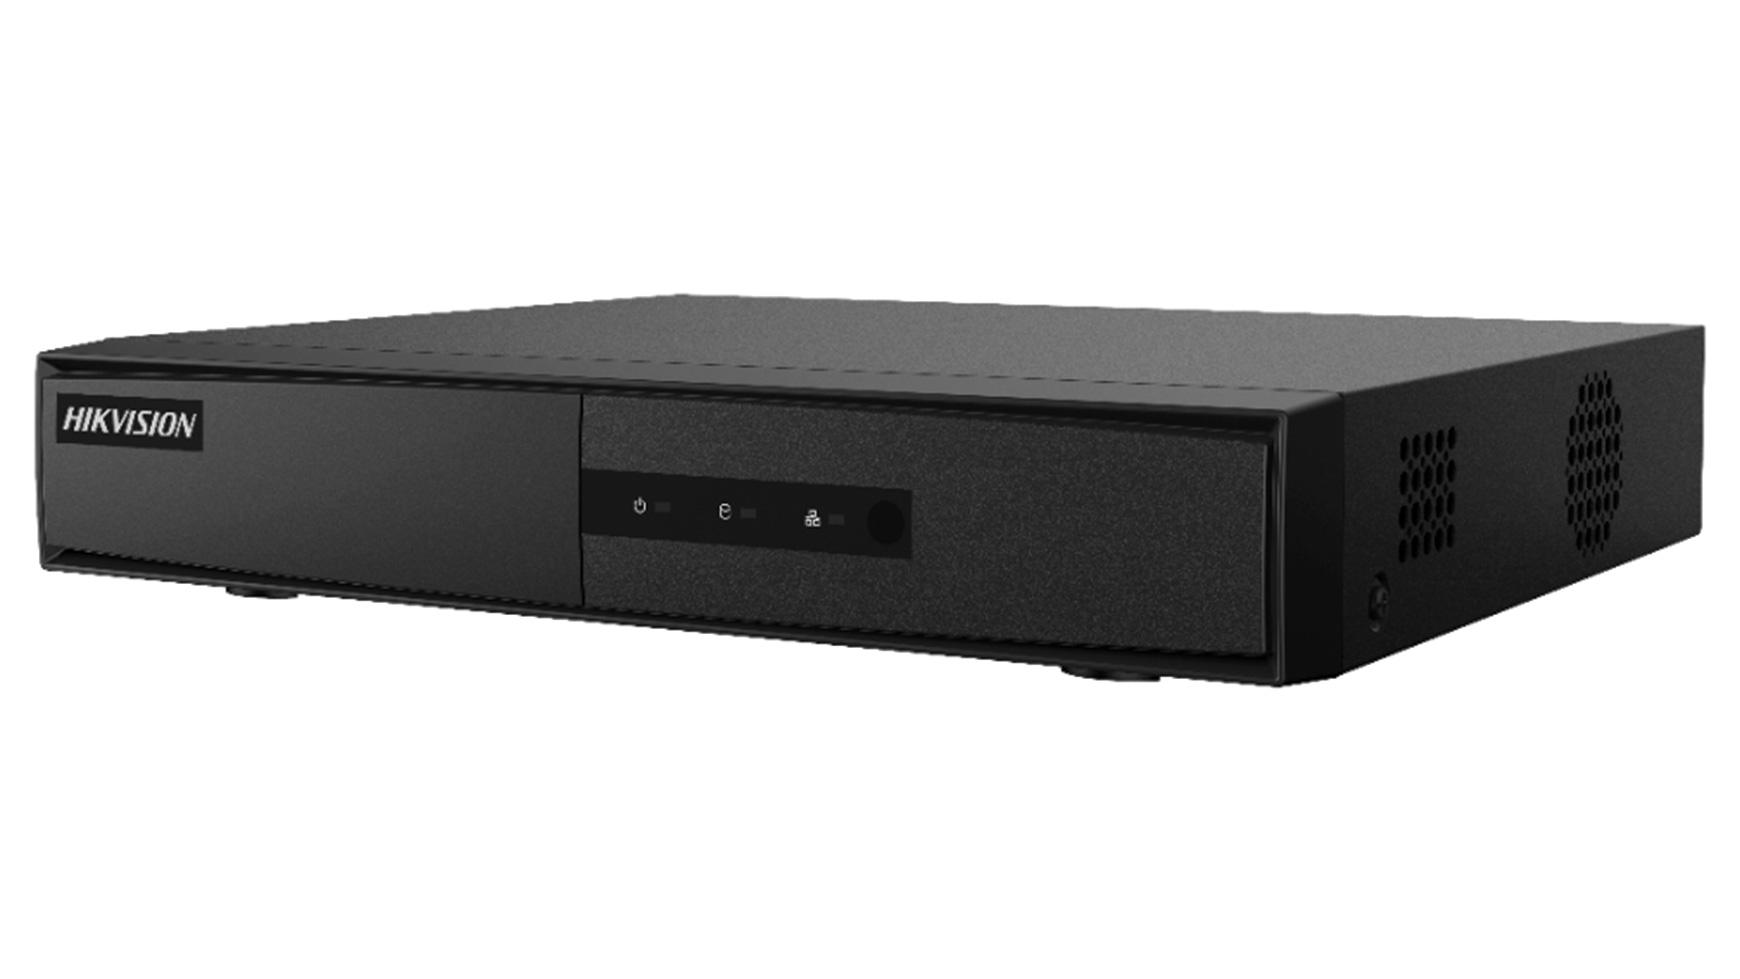 Hikvision DS-7208HGHI-F1/NB - Turbo HD video snimač sa 8 analogna kanala i 2 dodatna IP kanala do rezolucije 960p.